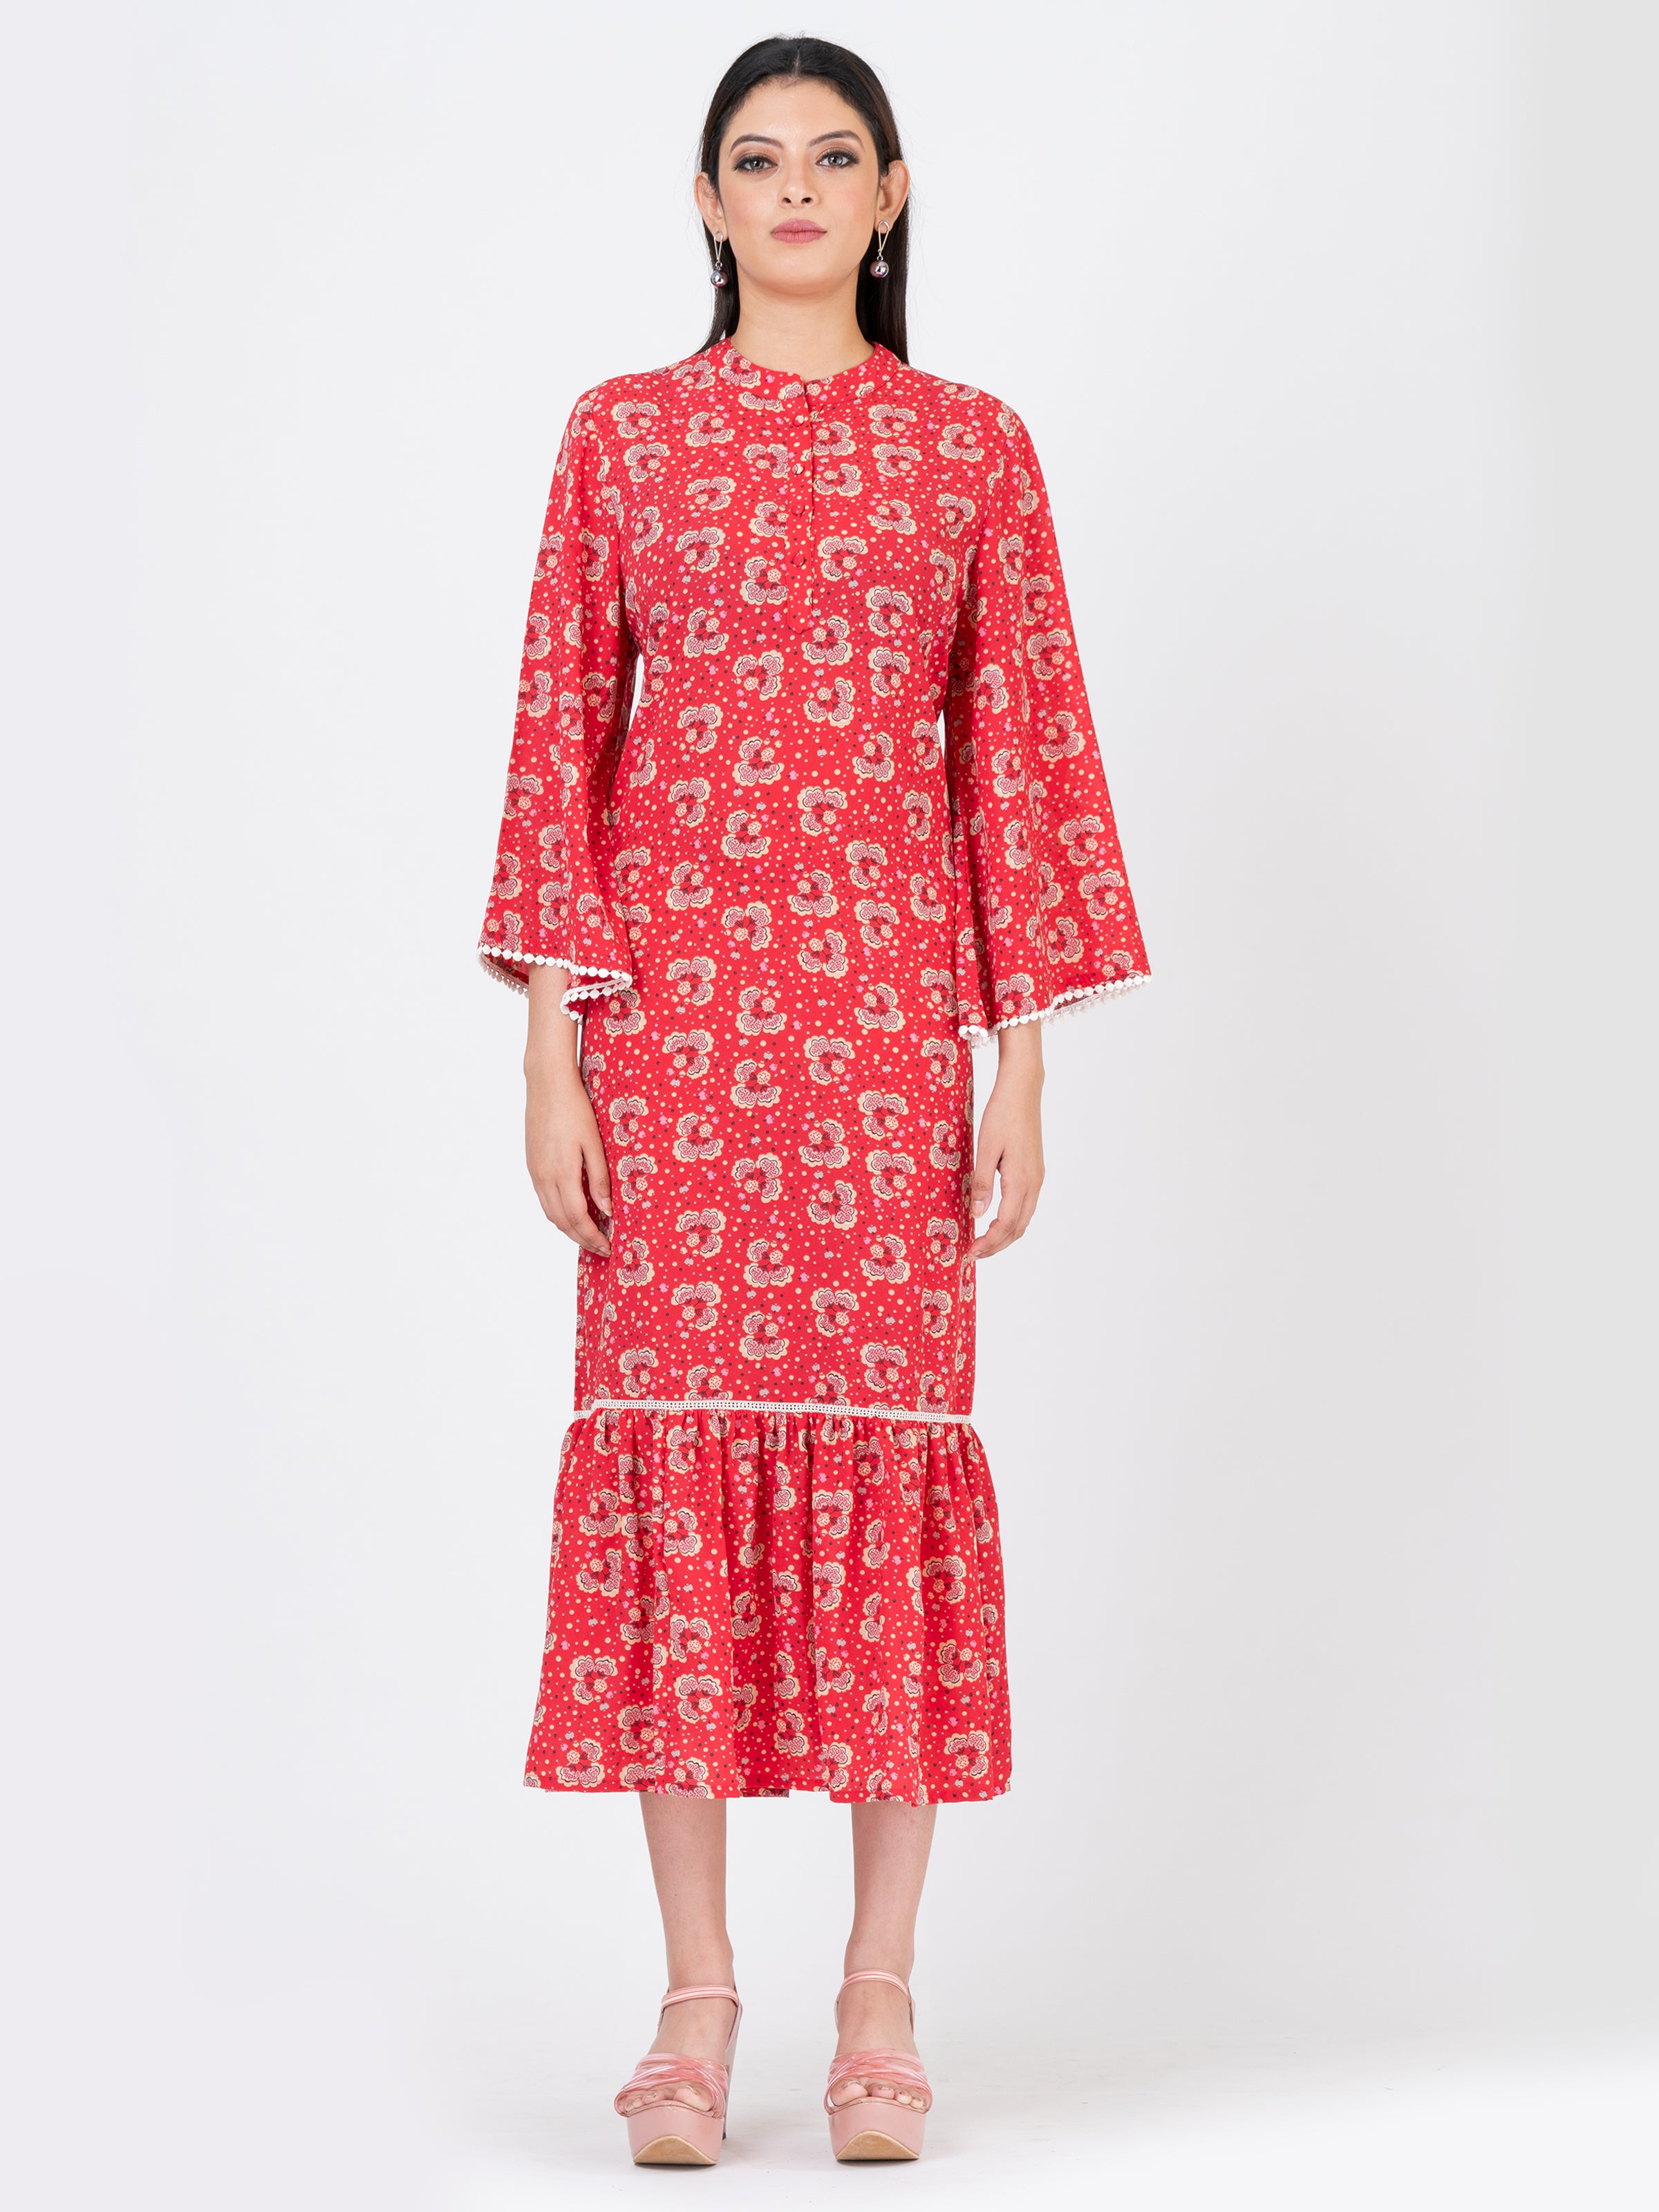 Women's V-Neck Long Sleeve Swing A-Line Dress Ladies Casual Floral Midi  Dresses | eBay